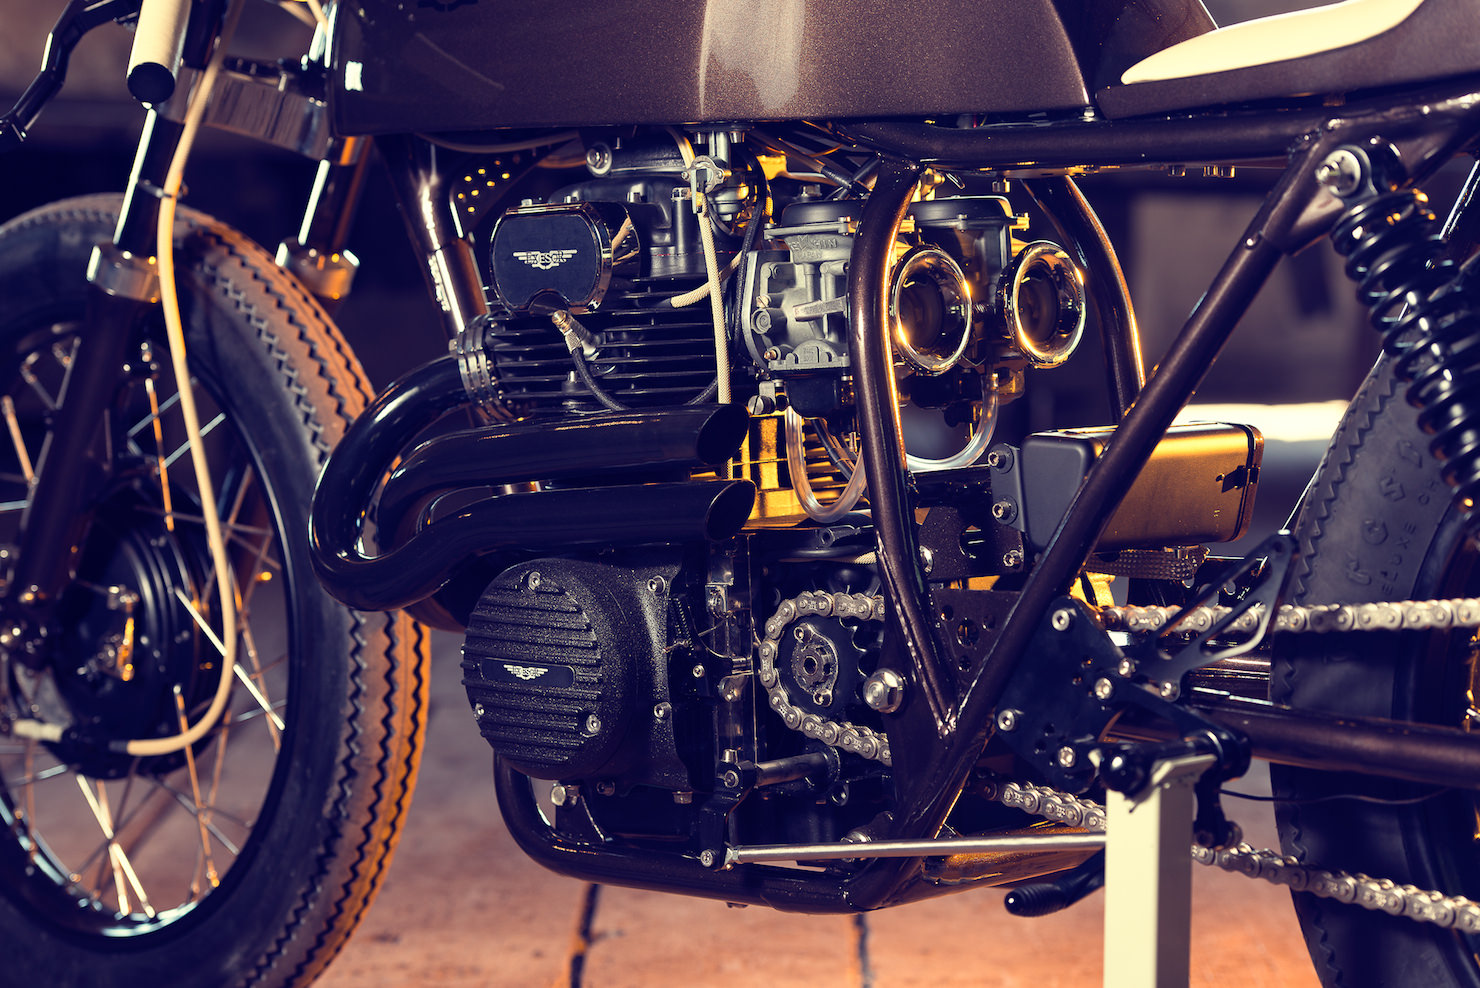 Honda CB250 by Exesor Motorcycles